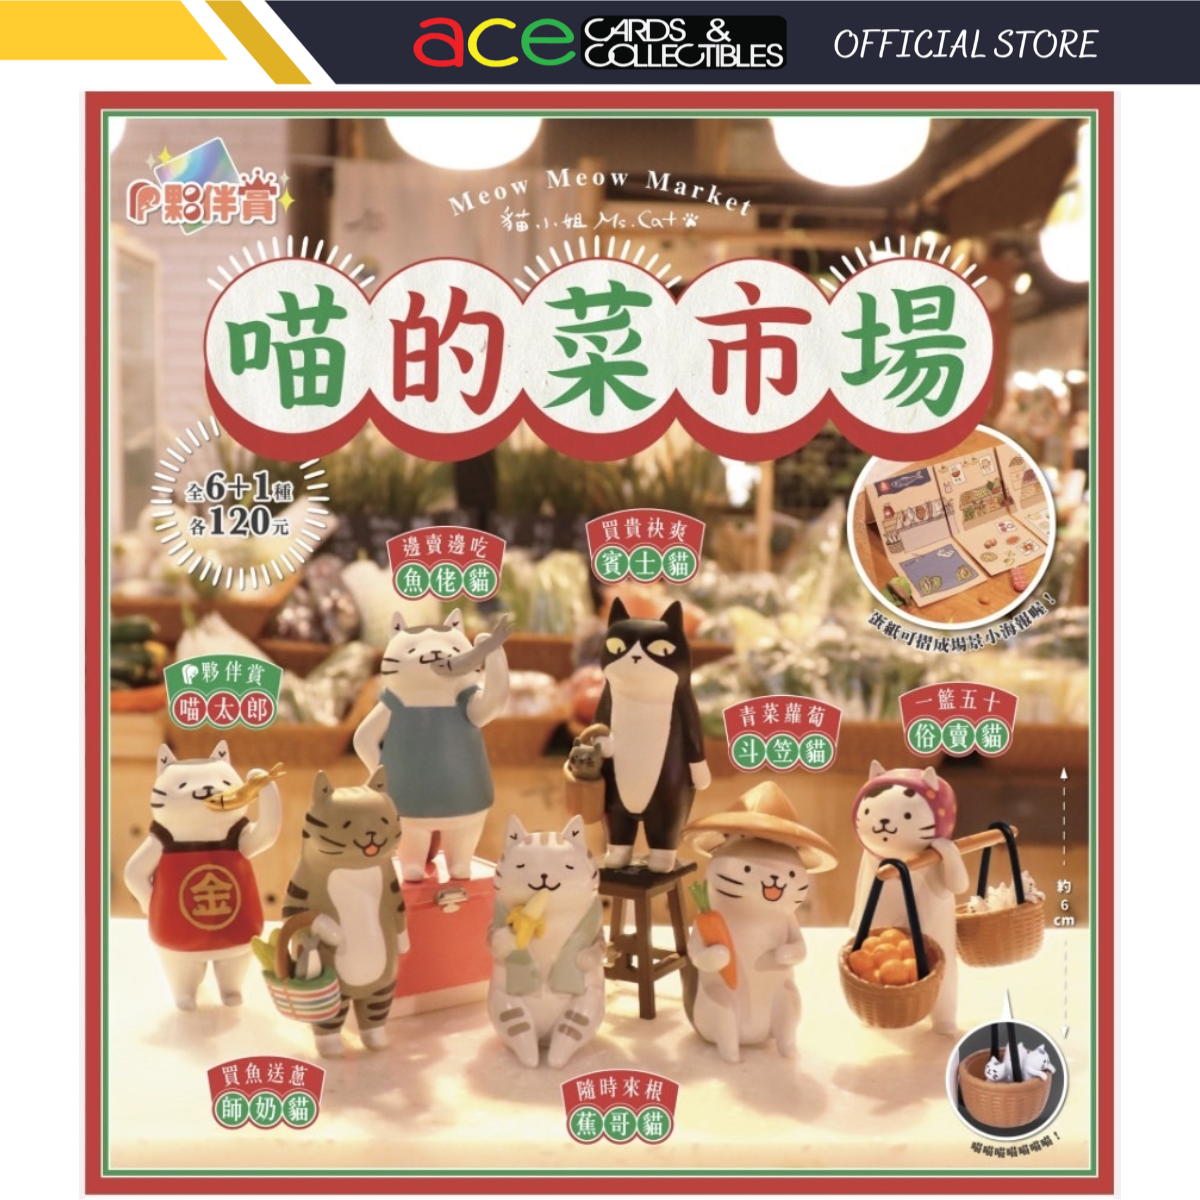 Partner Toys Meow Meow Market Series-Single Box (Random)-Partner Toys-Ace Cards & Collectibles